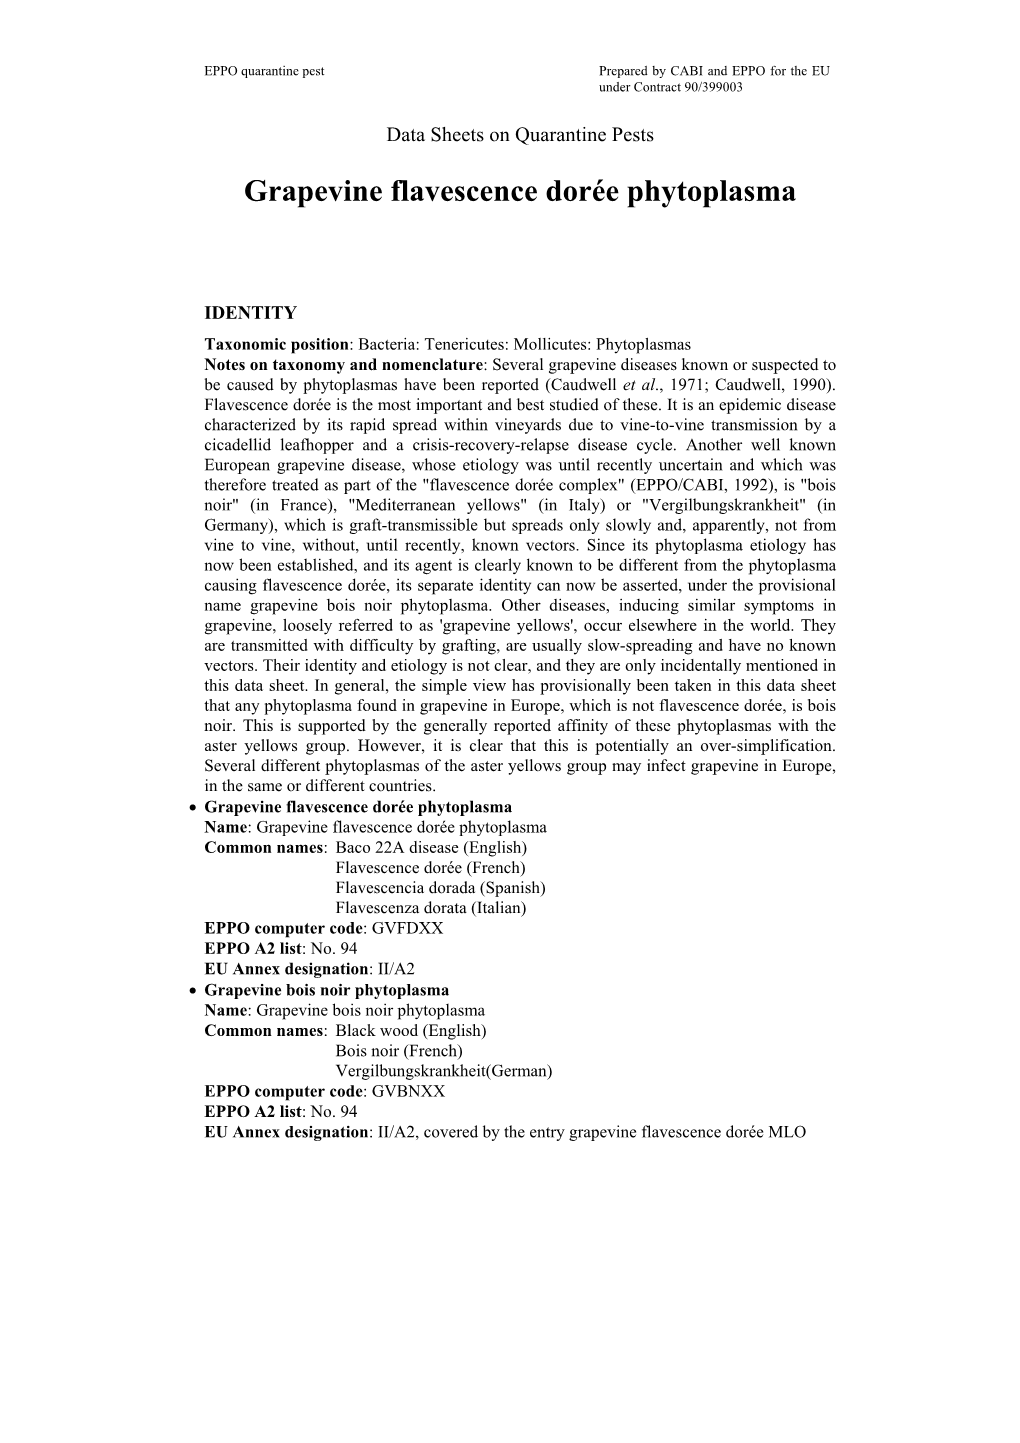 Data Sheet on Grapevine Flavescence Dorée Phytoplasma